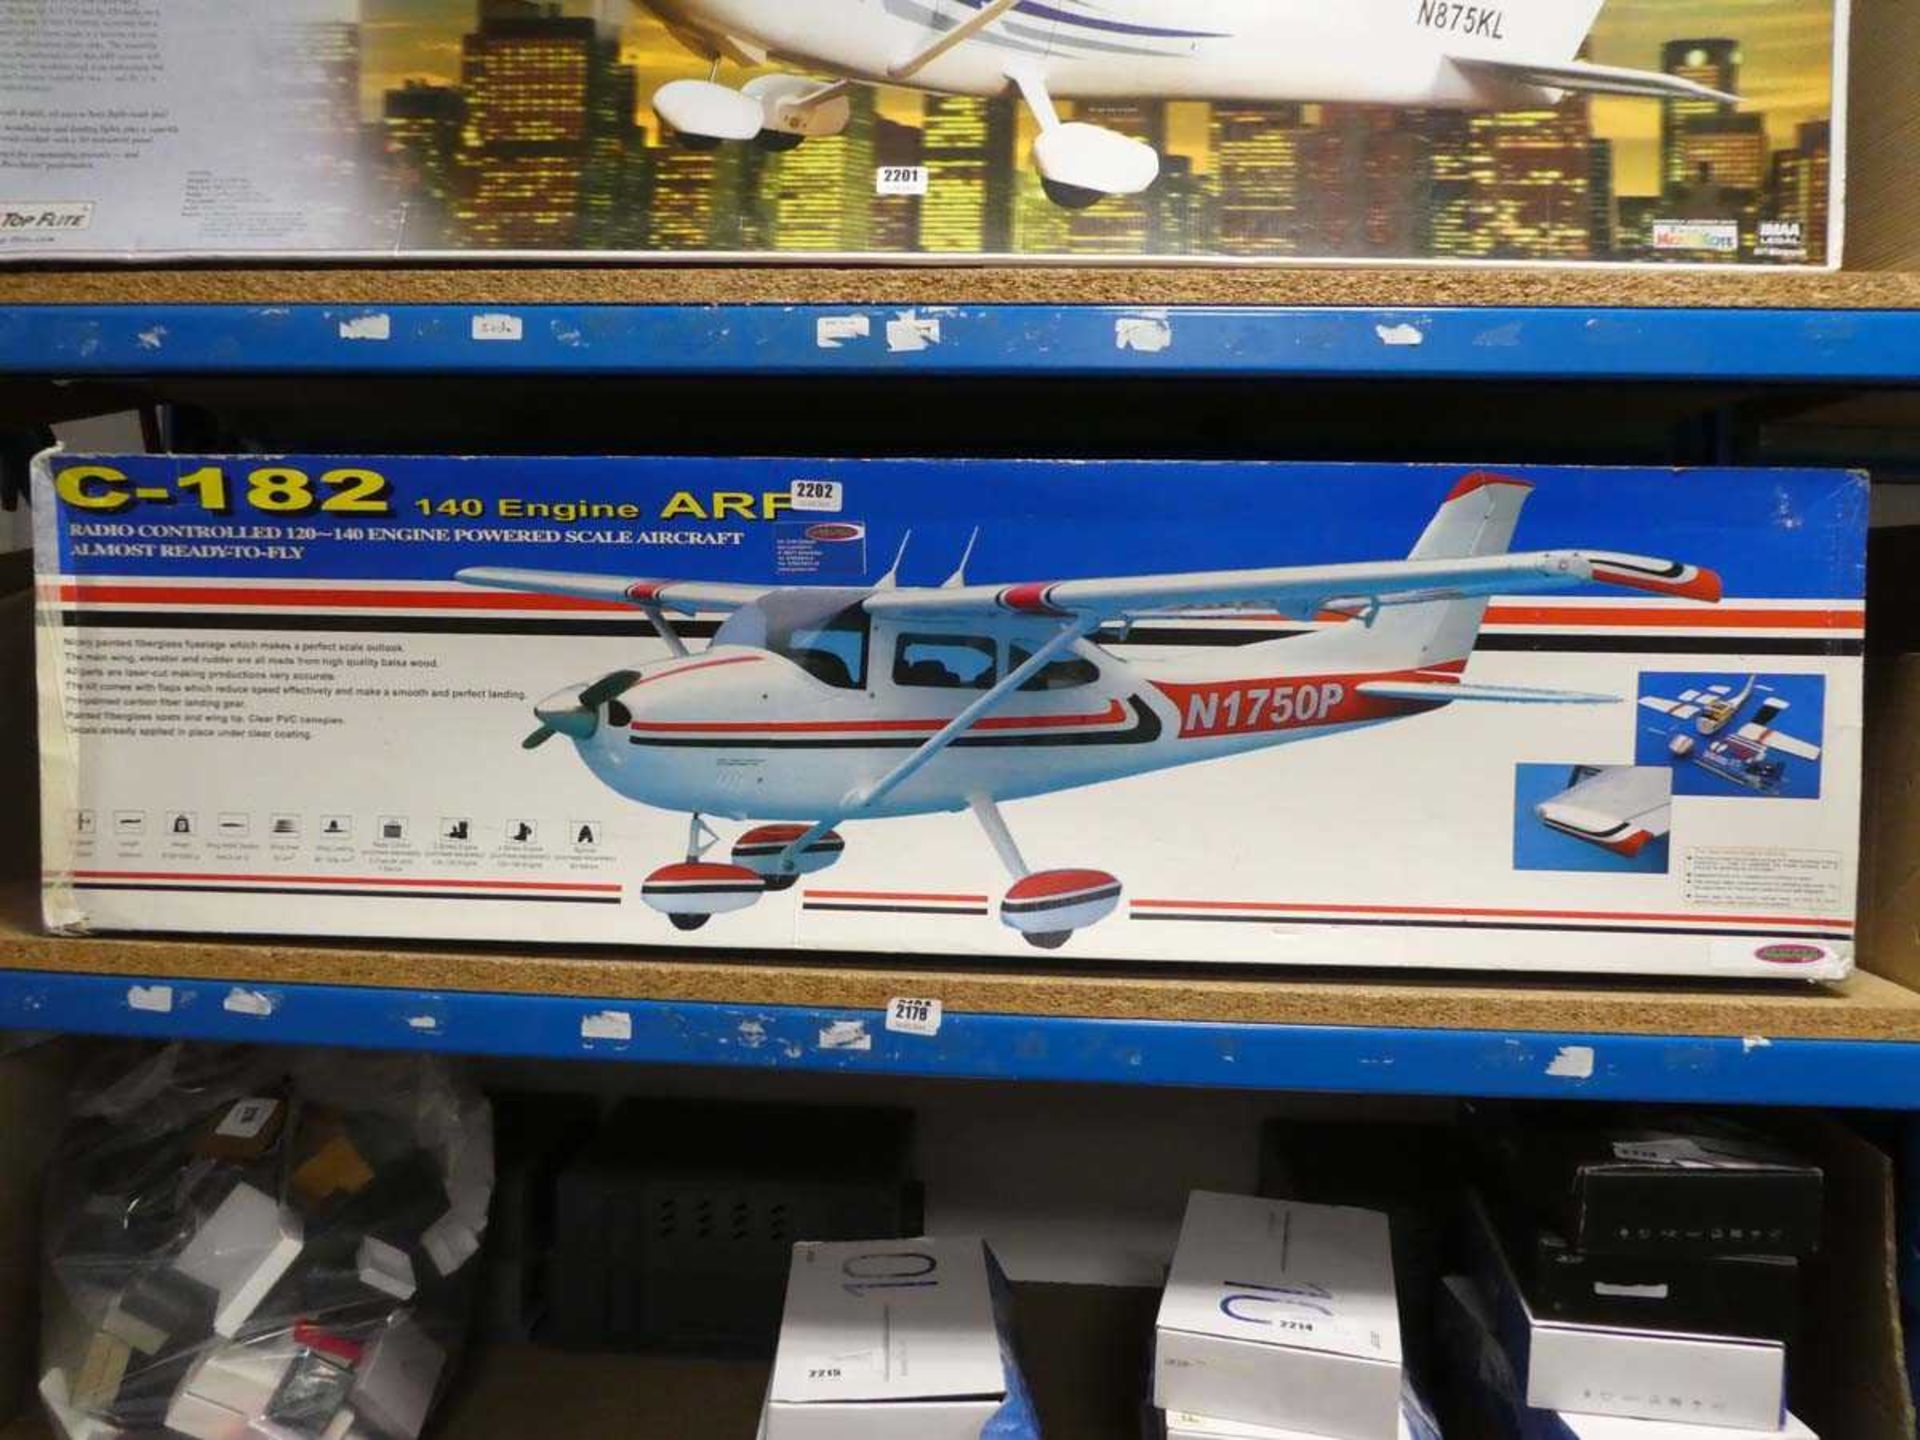 Jamara C-182 140 engine ARF radio controlled model plane, boxed